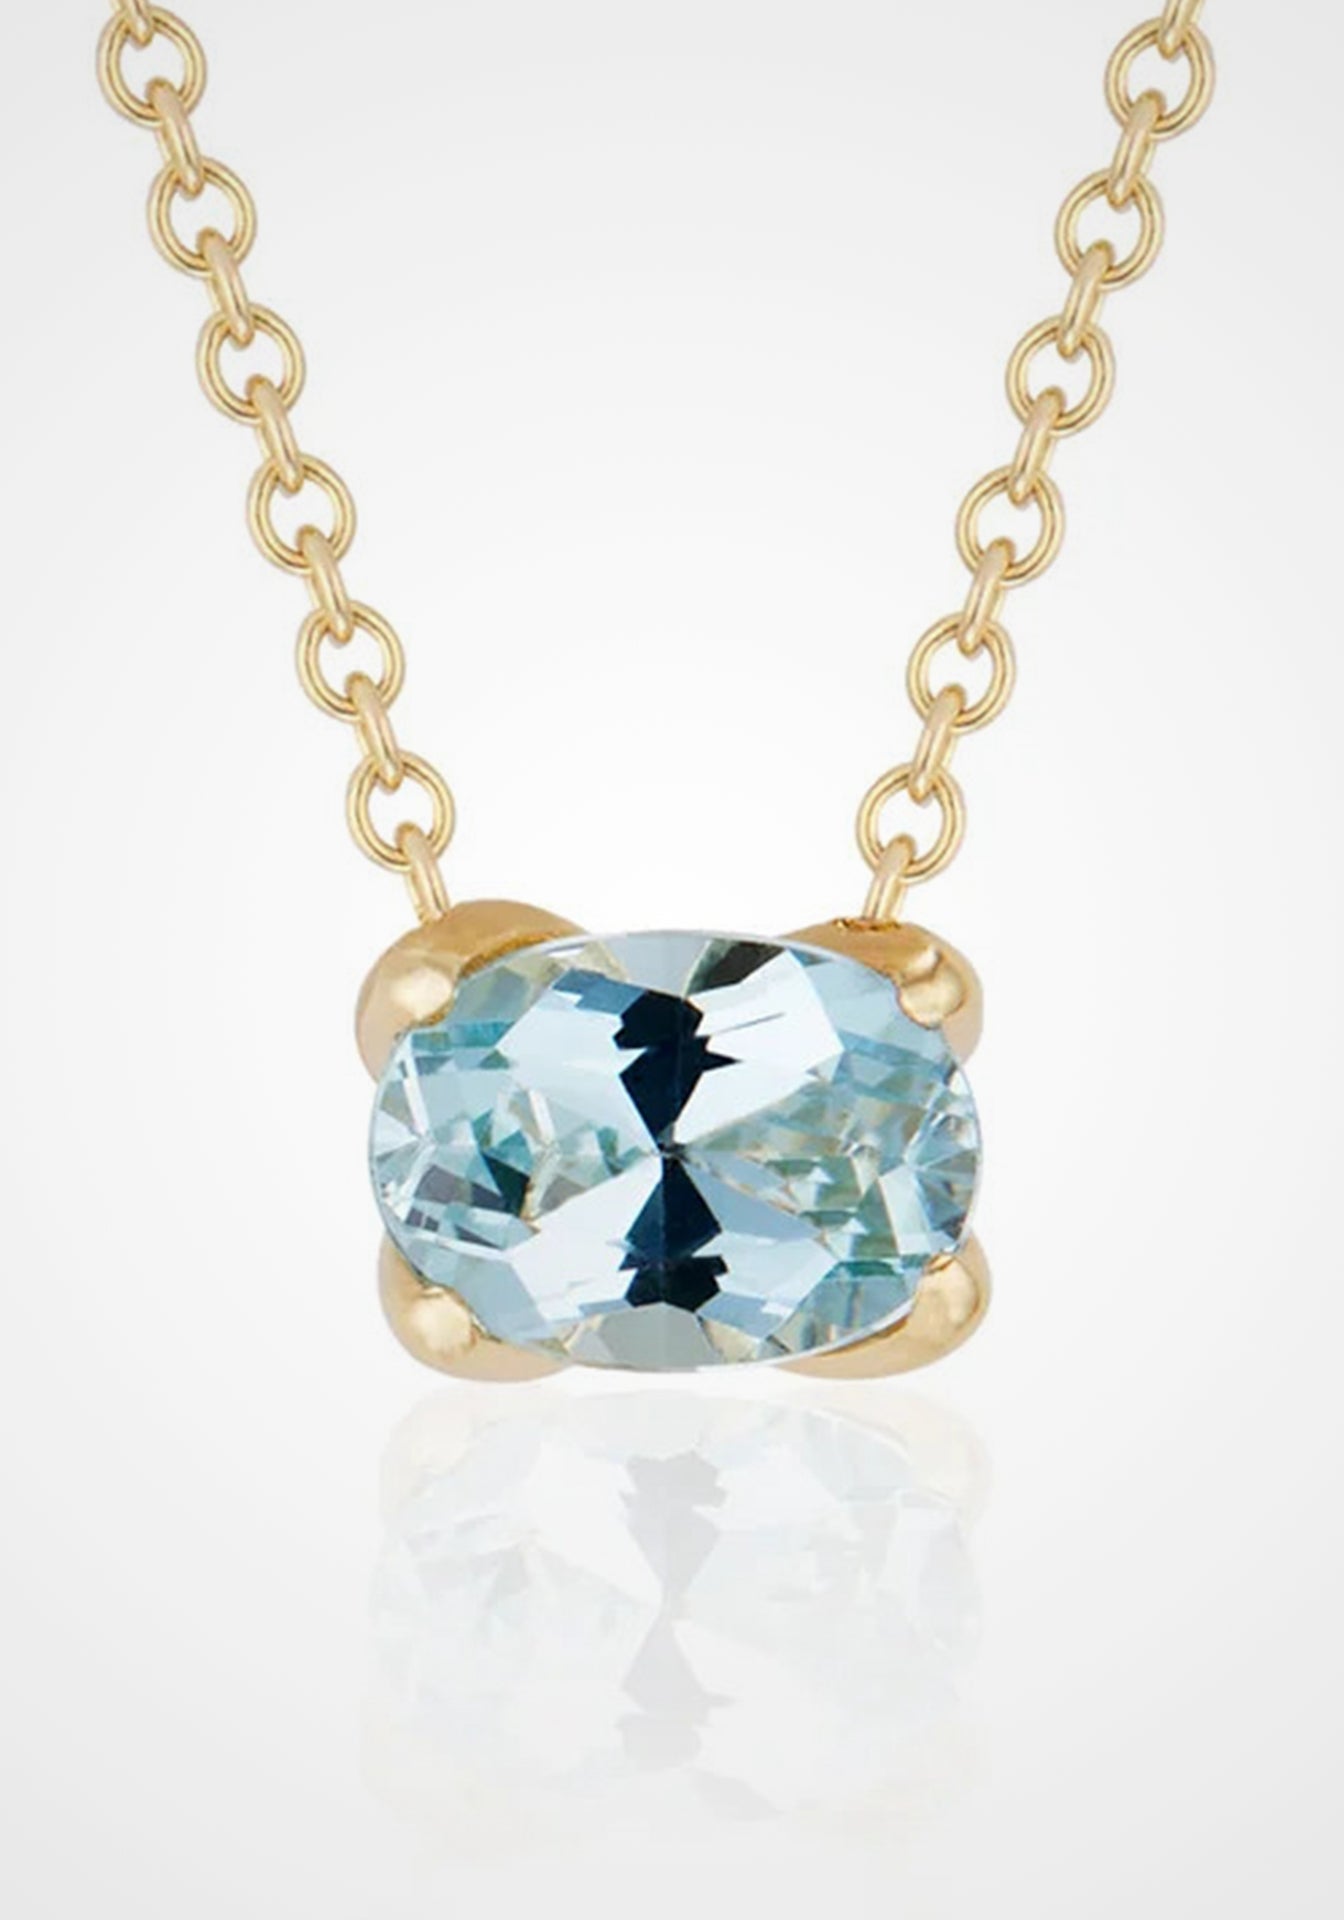 H, 18K Yellow Gold + Aquamarine Necklace